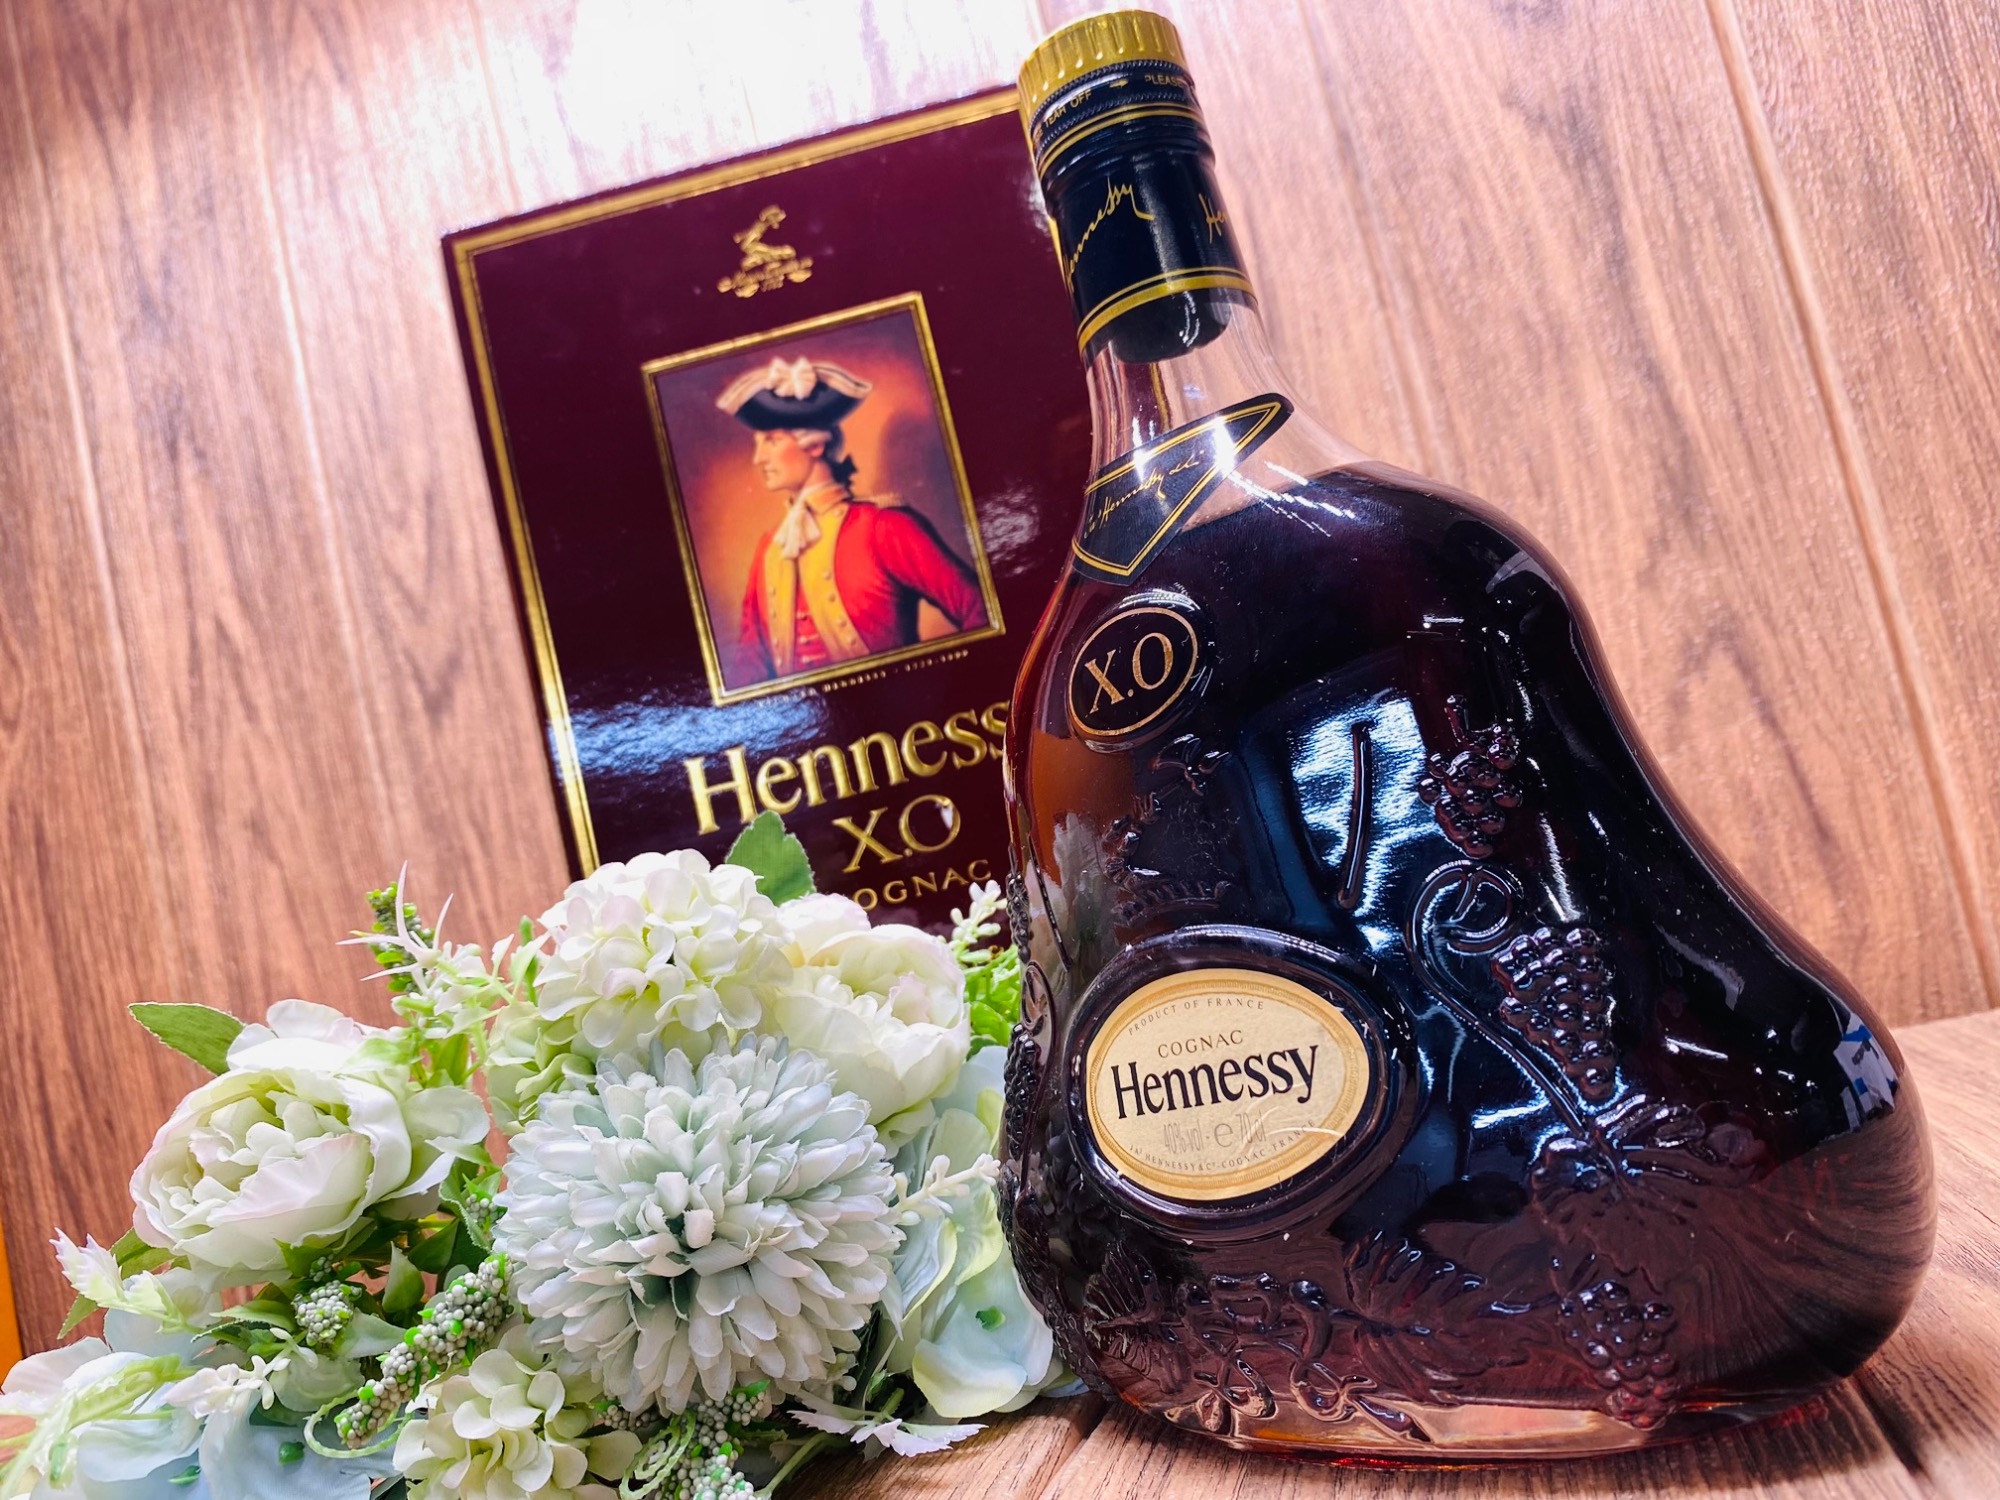 Hennessy ヘネシー XO ブランデー コニャック 金キャップが買取入荷